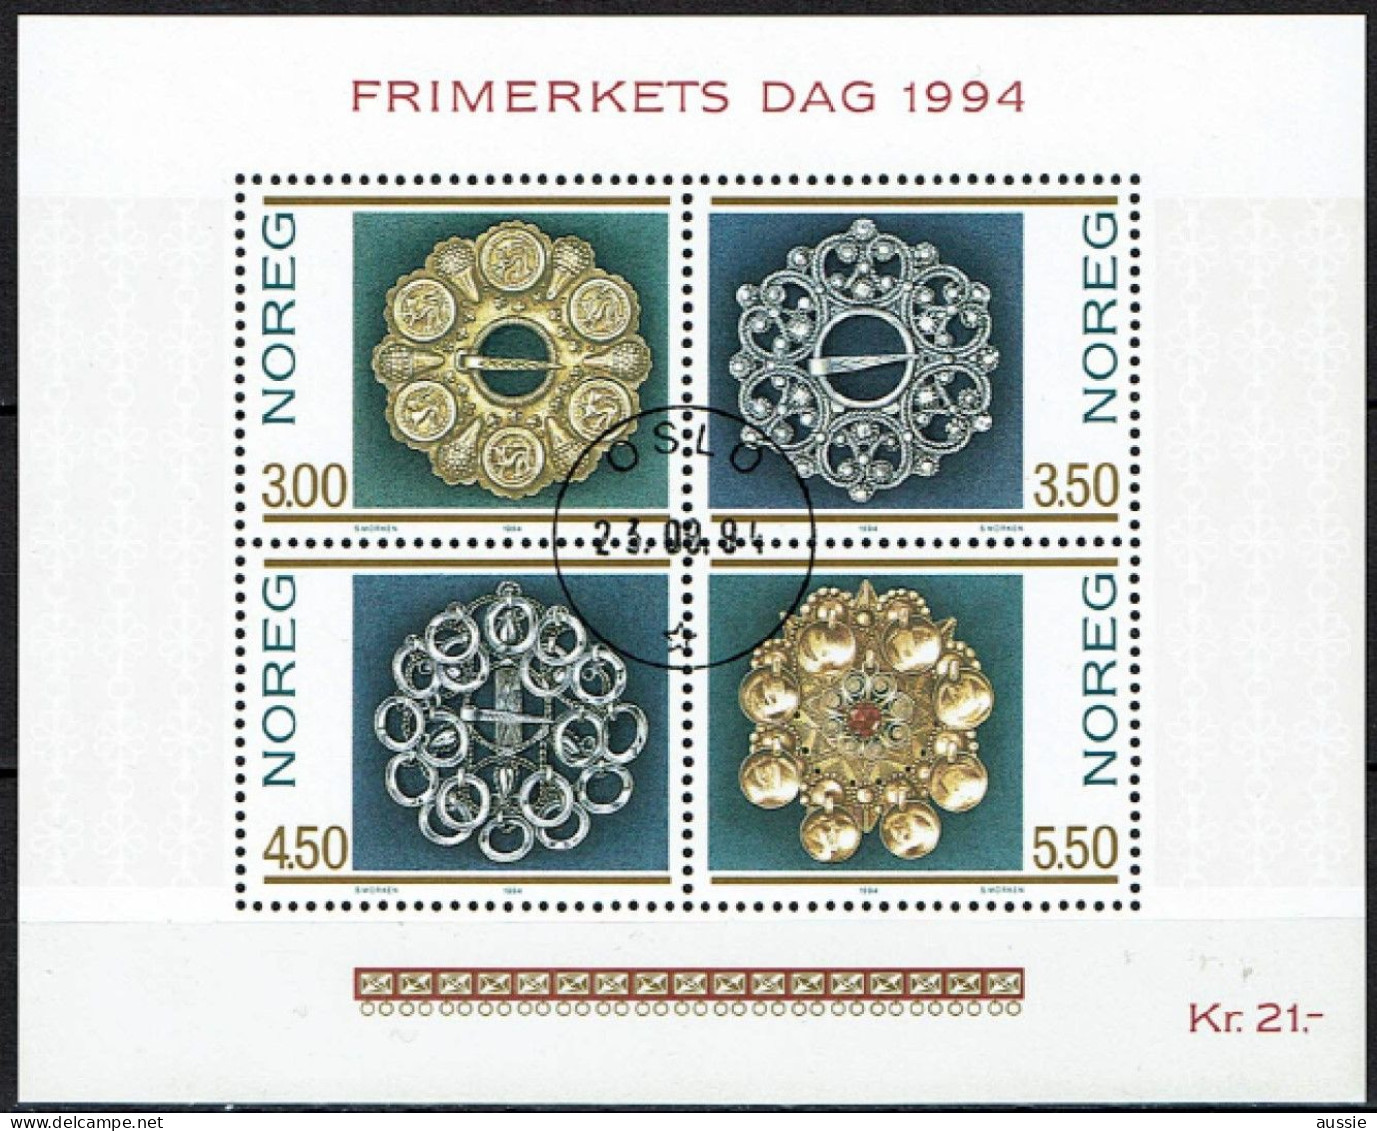 Norvège Noorwegen Norway 1994 Yvertn° Bloc 21 (o) Cote 10 € Journée Du Timbre - Blocks & Sheetlets